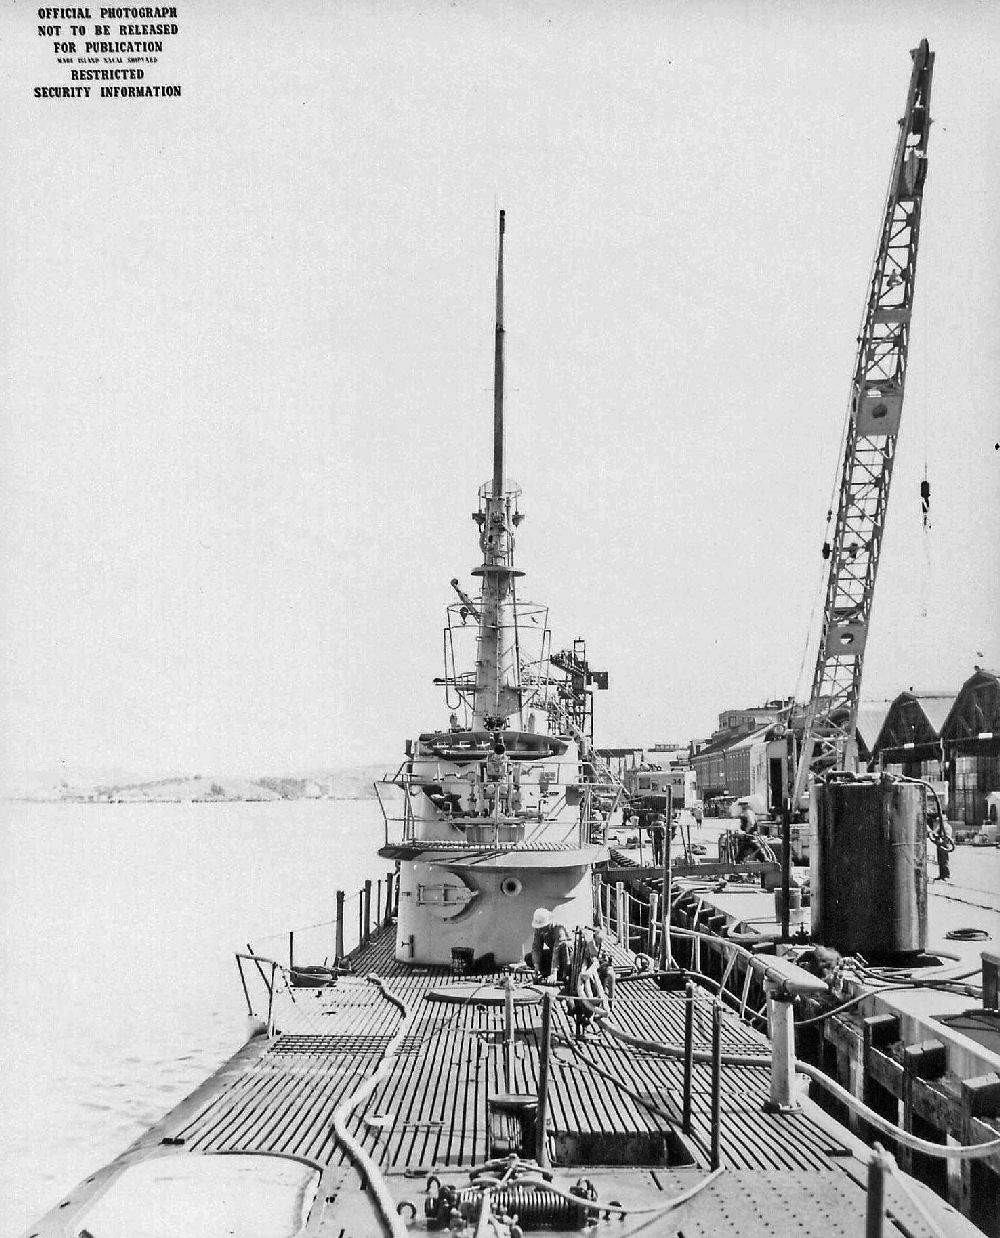 USS Archerfish at Mare Island Navy Yard, Vallejo, California, United States, 25 Mar 1952, photo 1 of 3